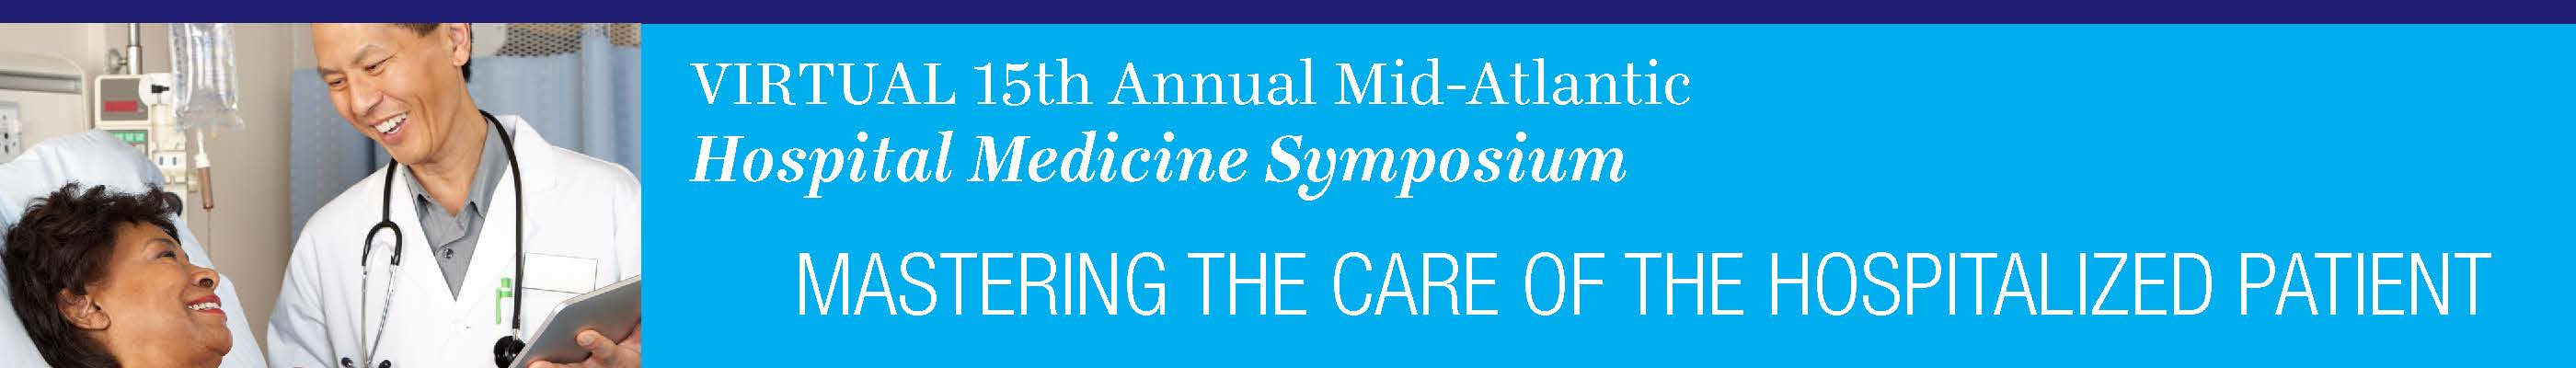 Virtual 15th Annual Mid-Atlantic Hospital Medicine Symposium Banner